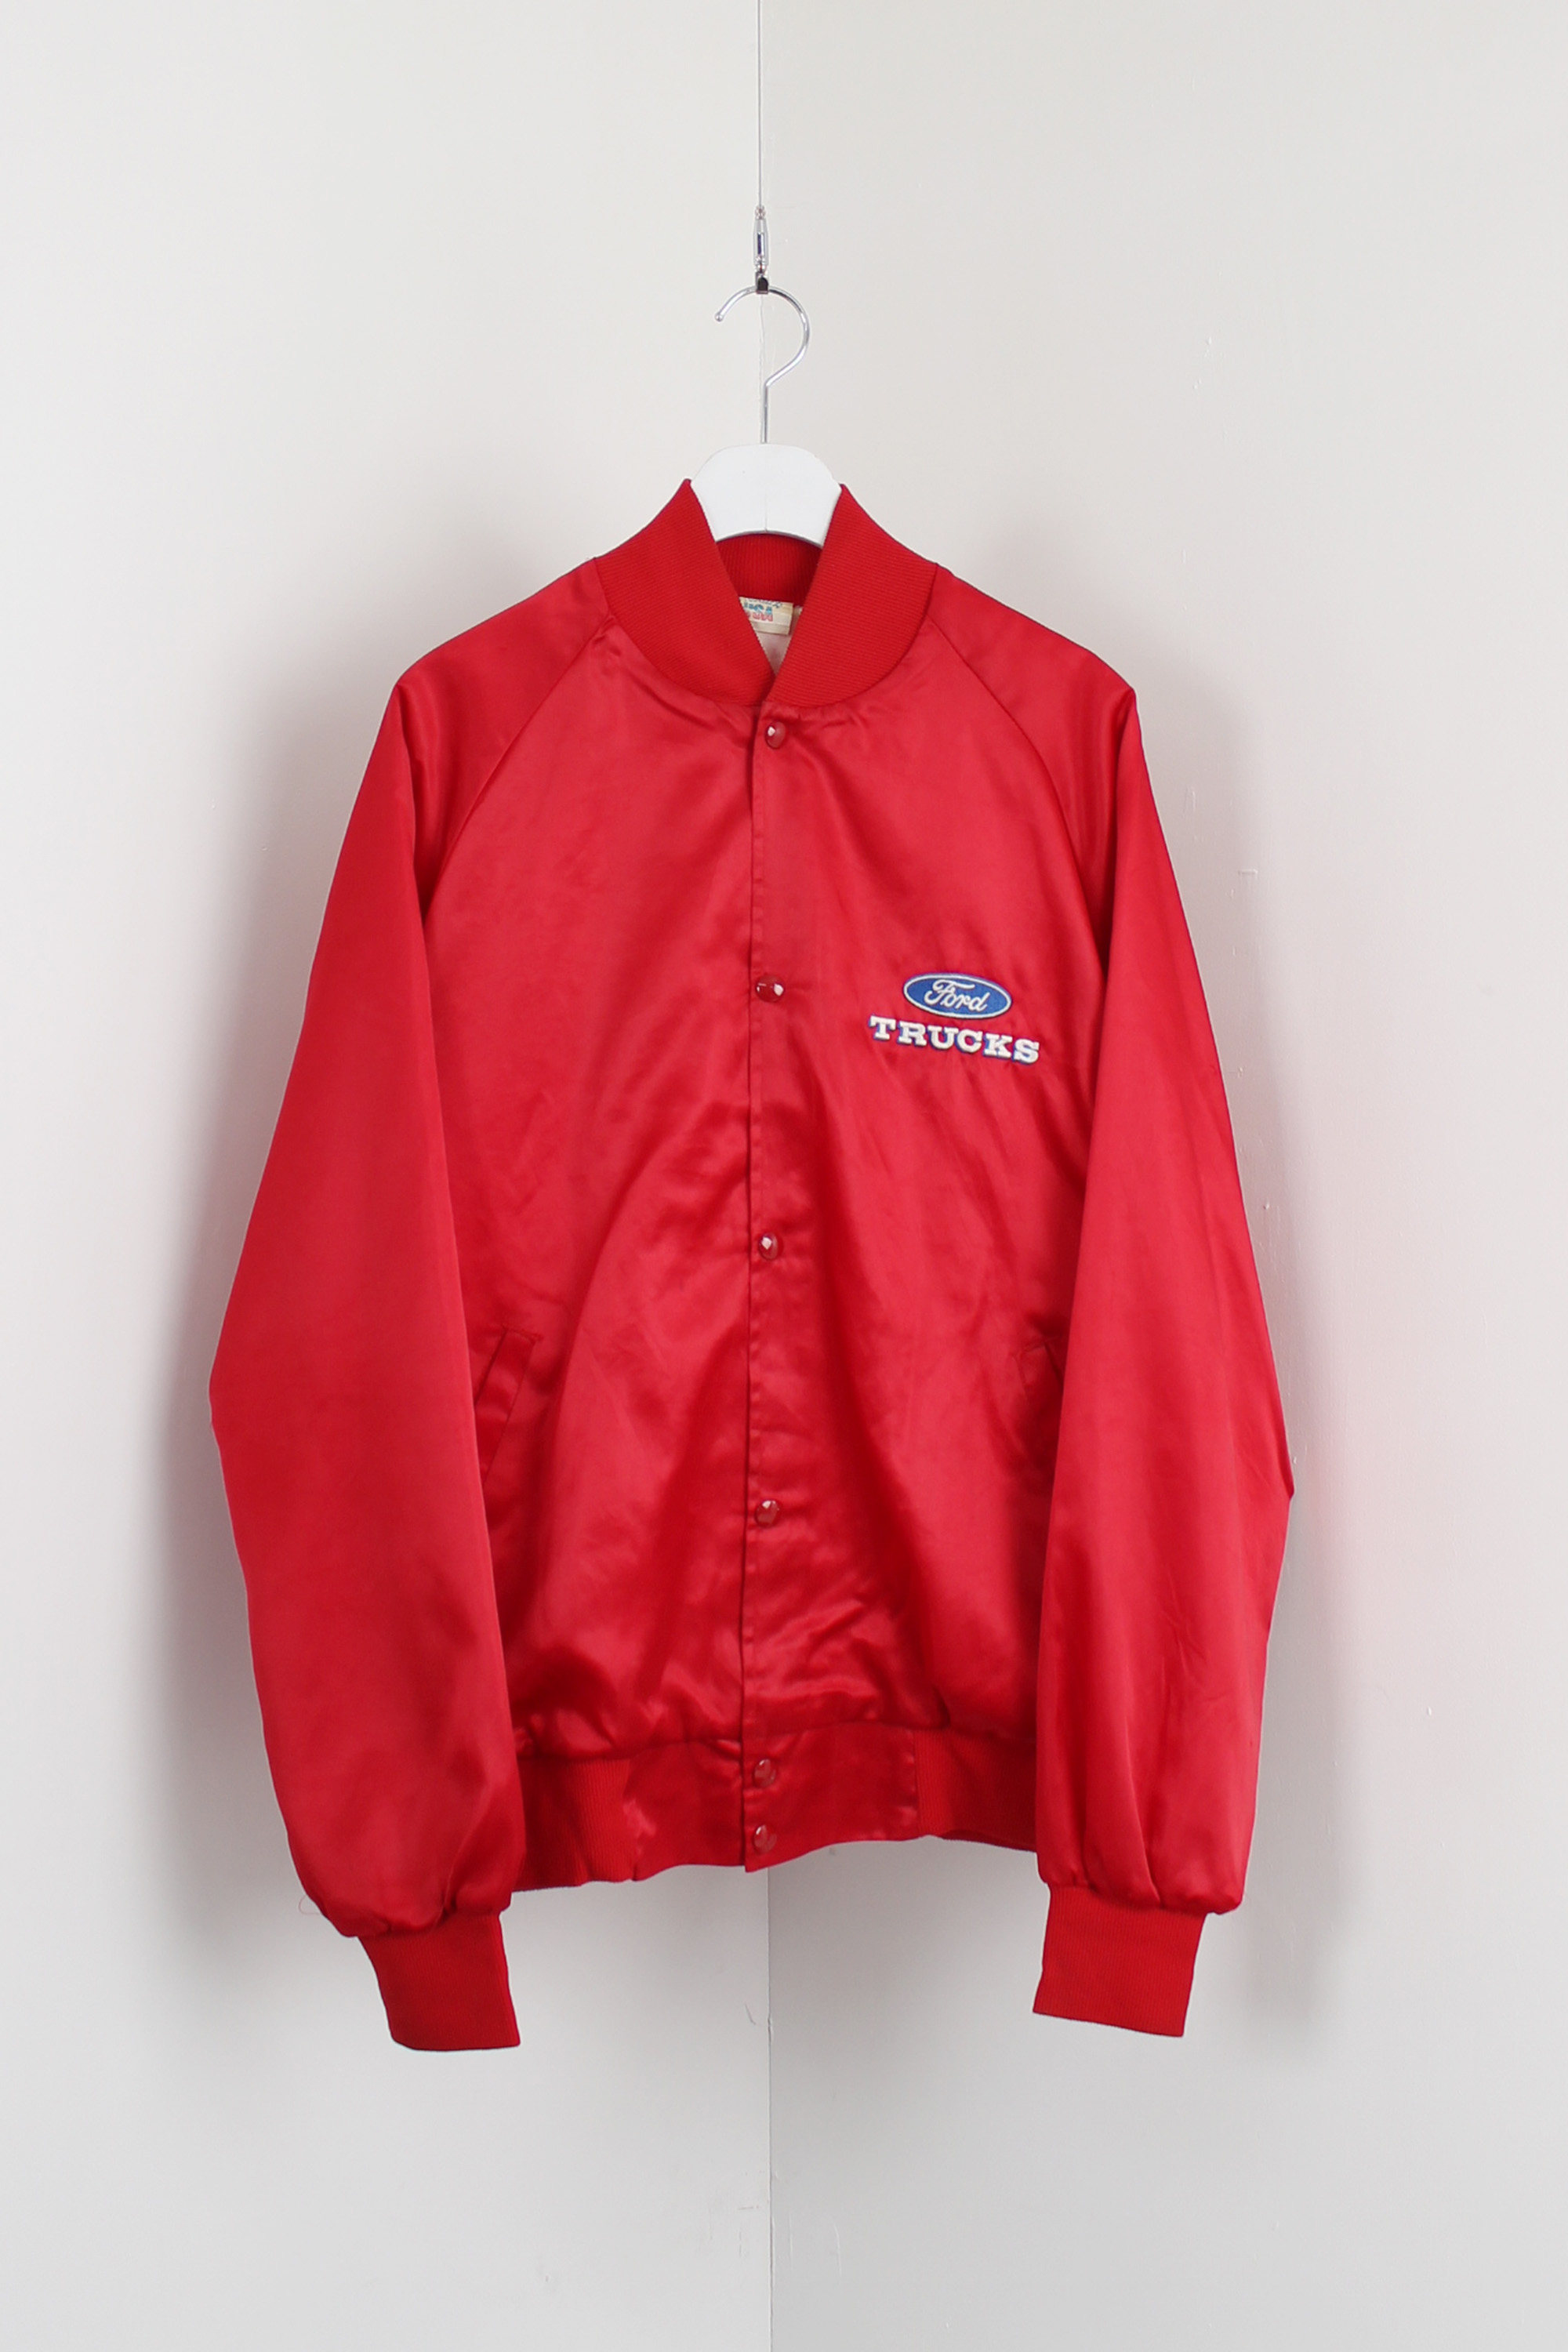 80s westark ford stadium jacket